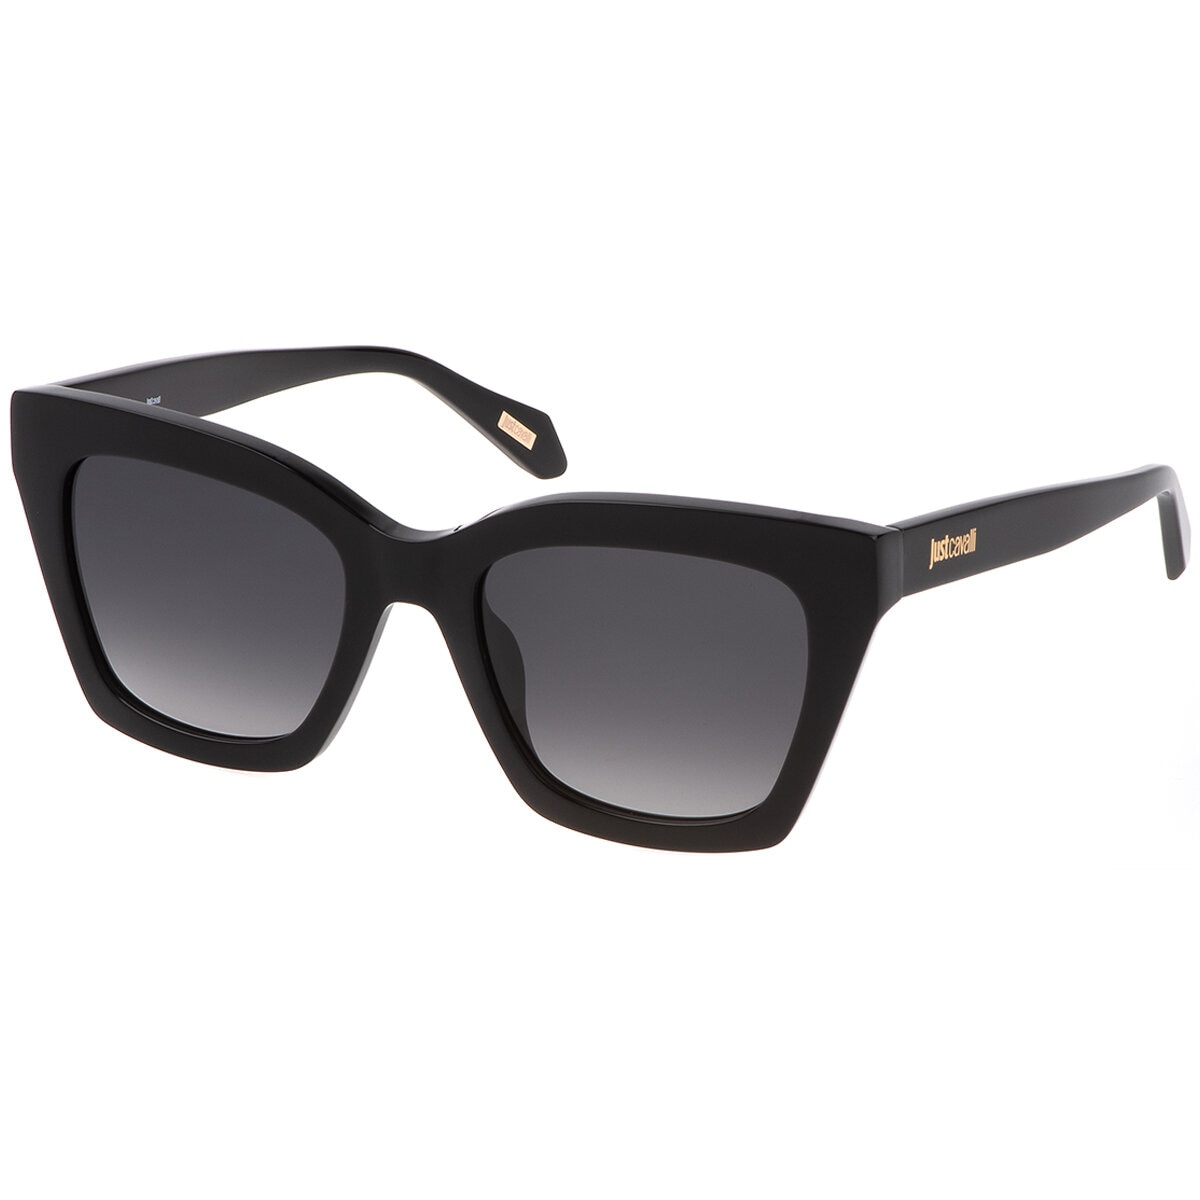 Just Cavalli SJC024 Women's Sunglasses